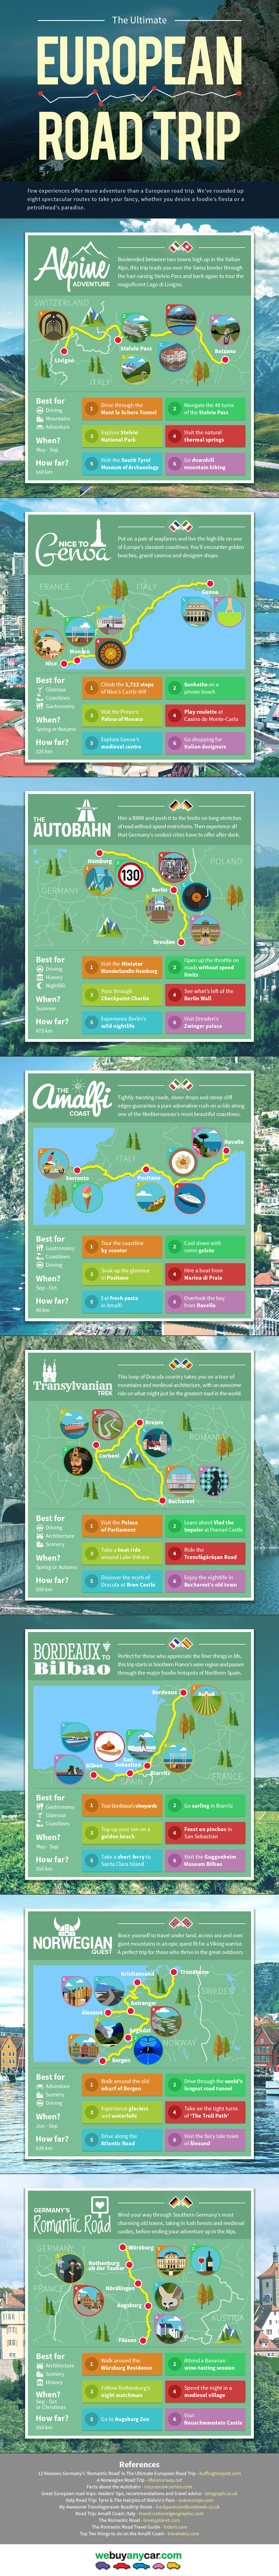 European Road Trip Infographic